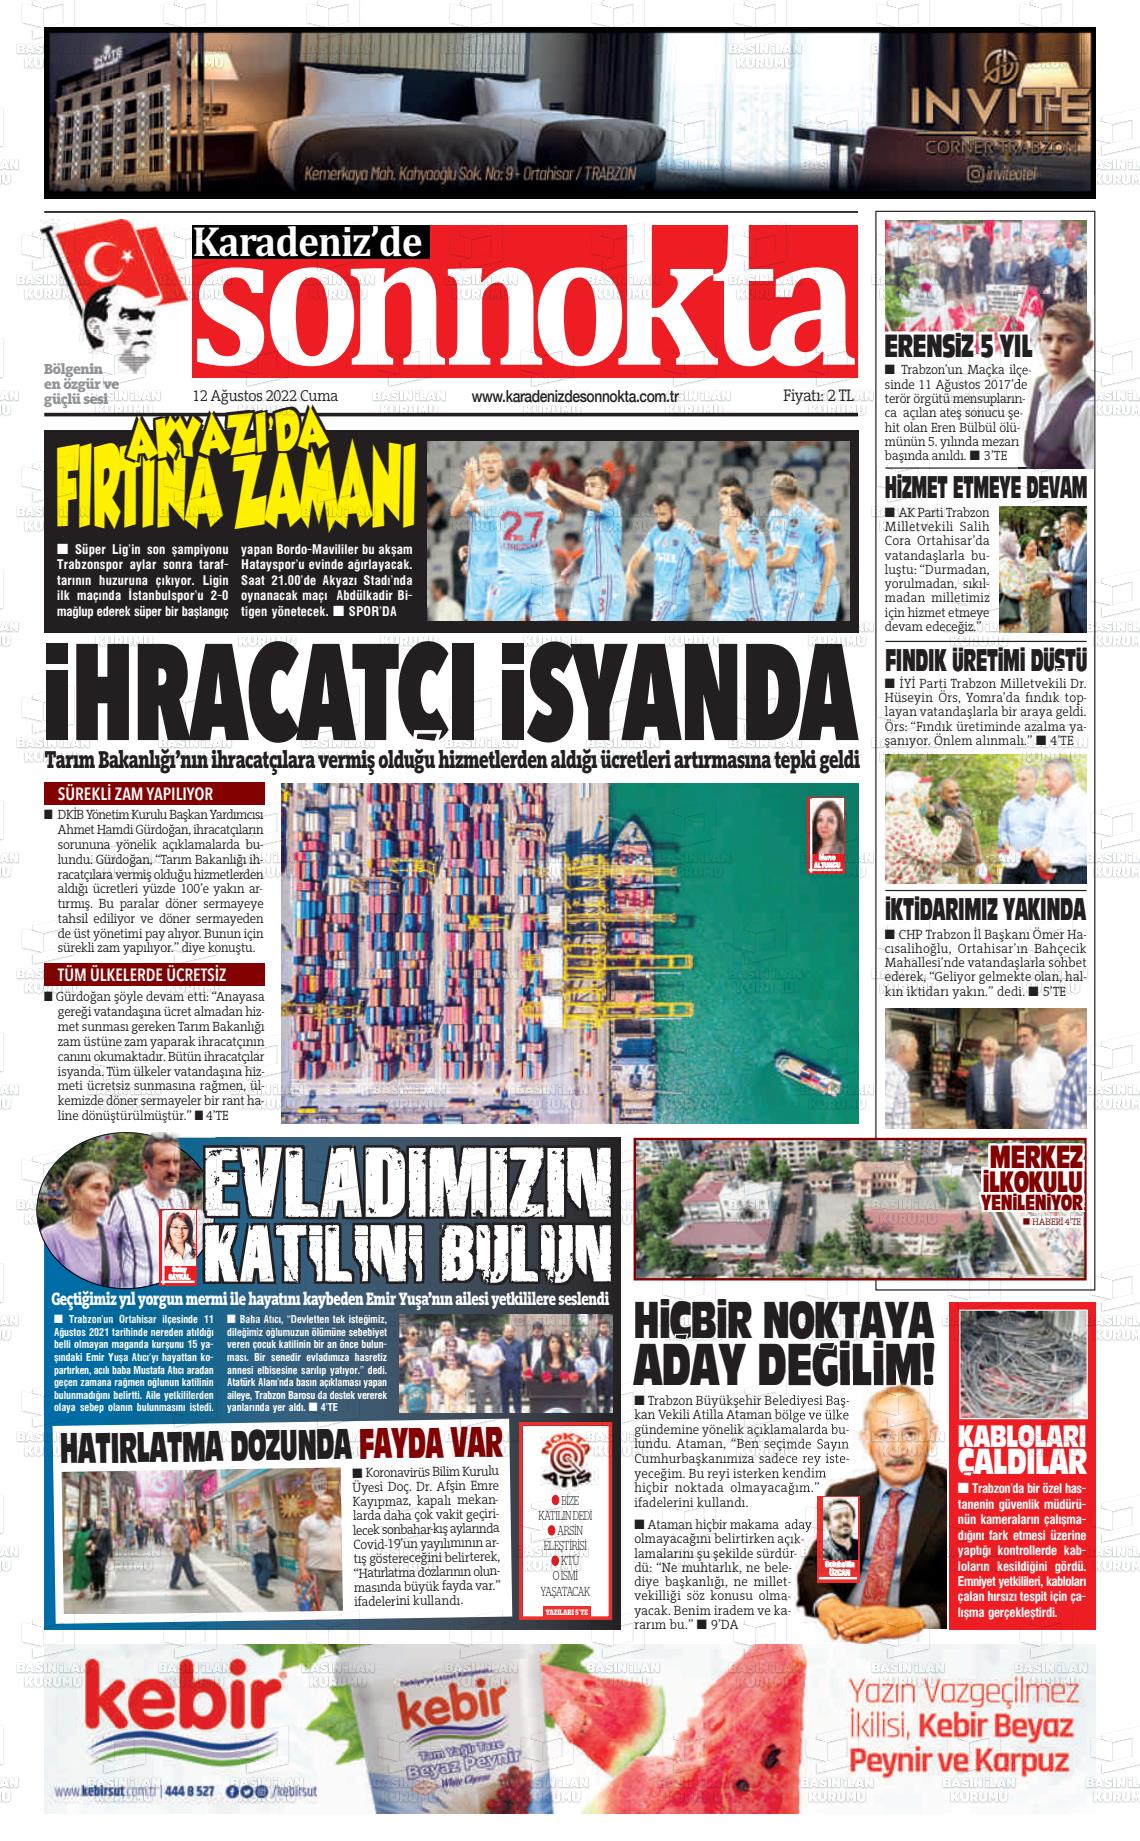 12 Ağustos 2022 Karadeniz'de Sonnokta Gazete Manşeti